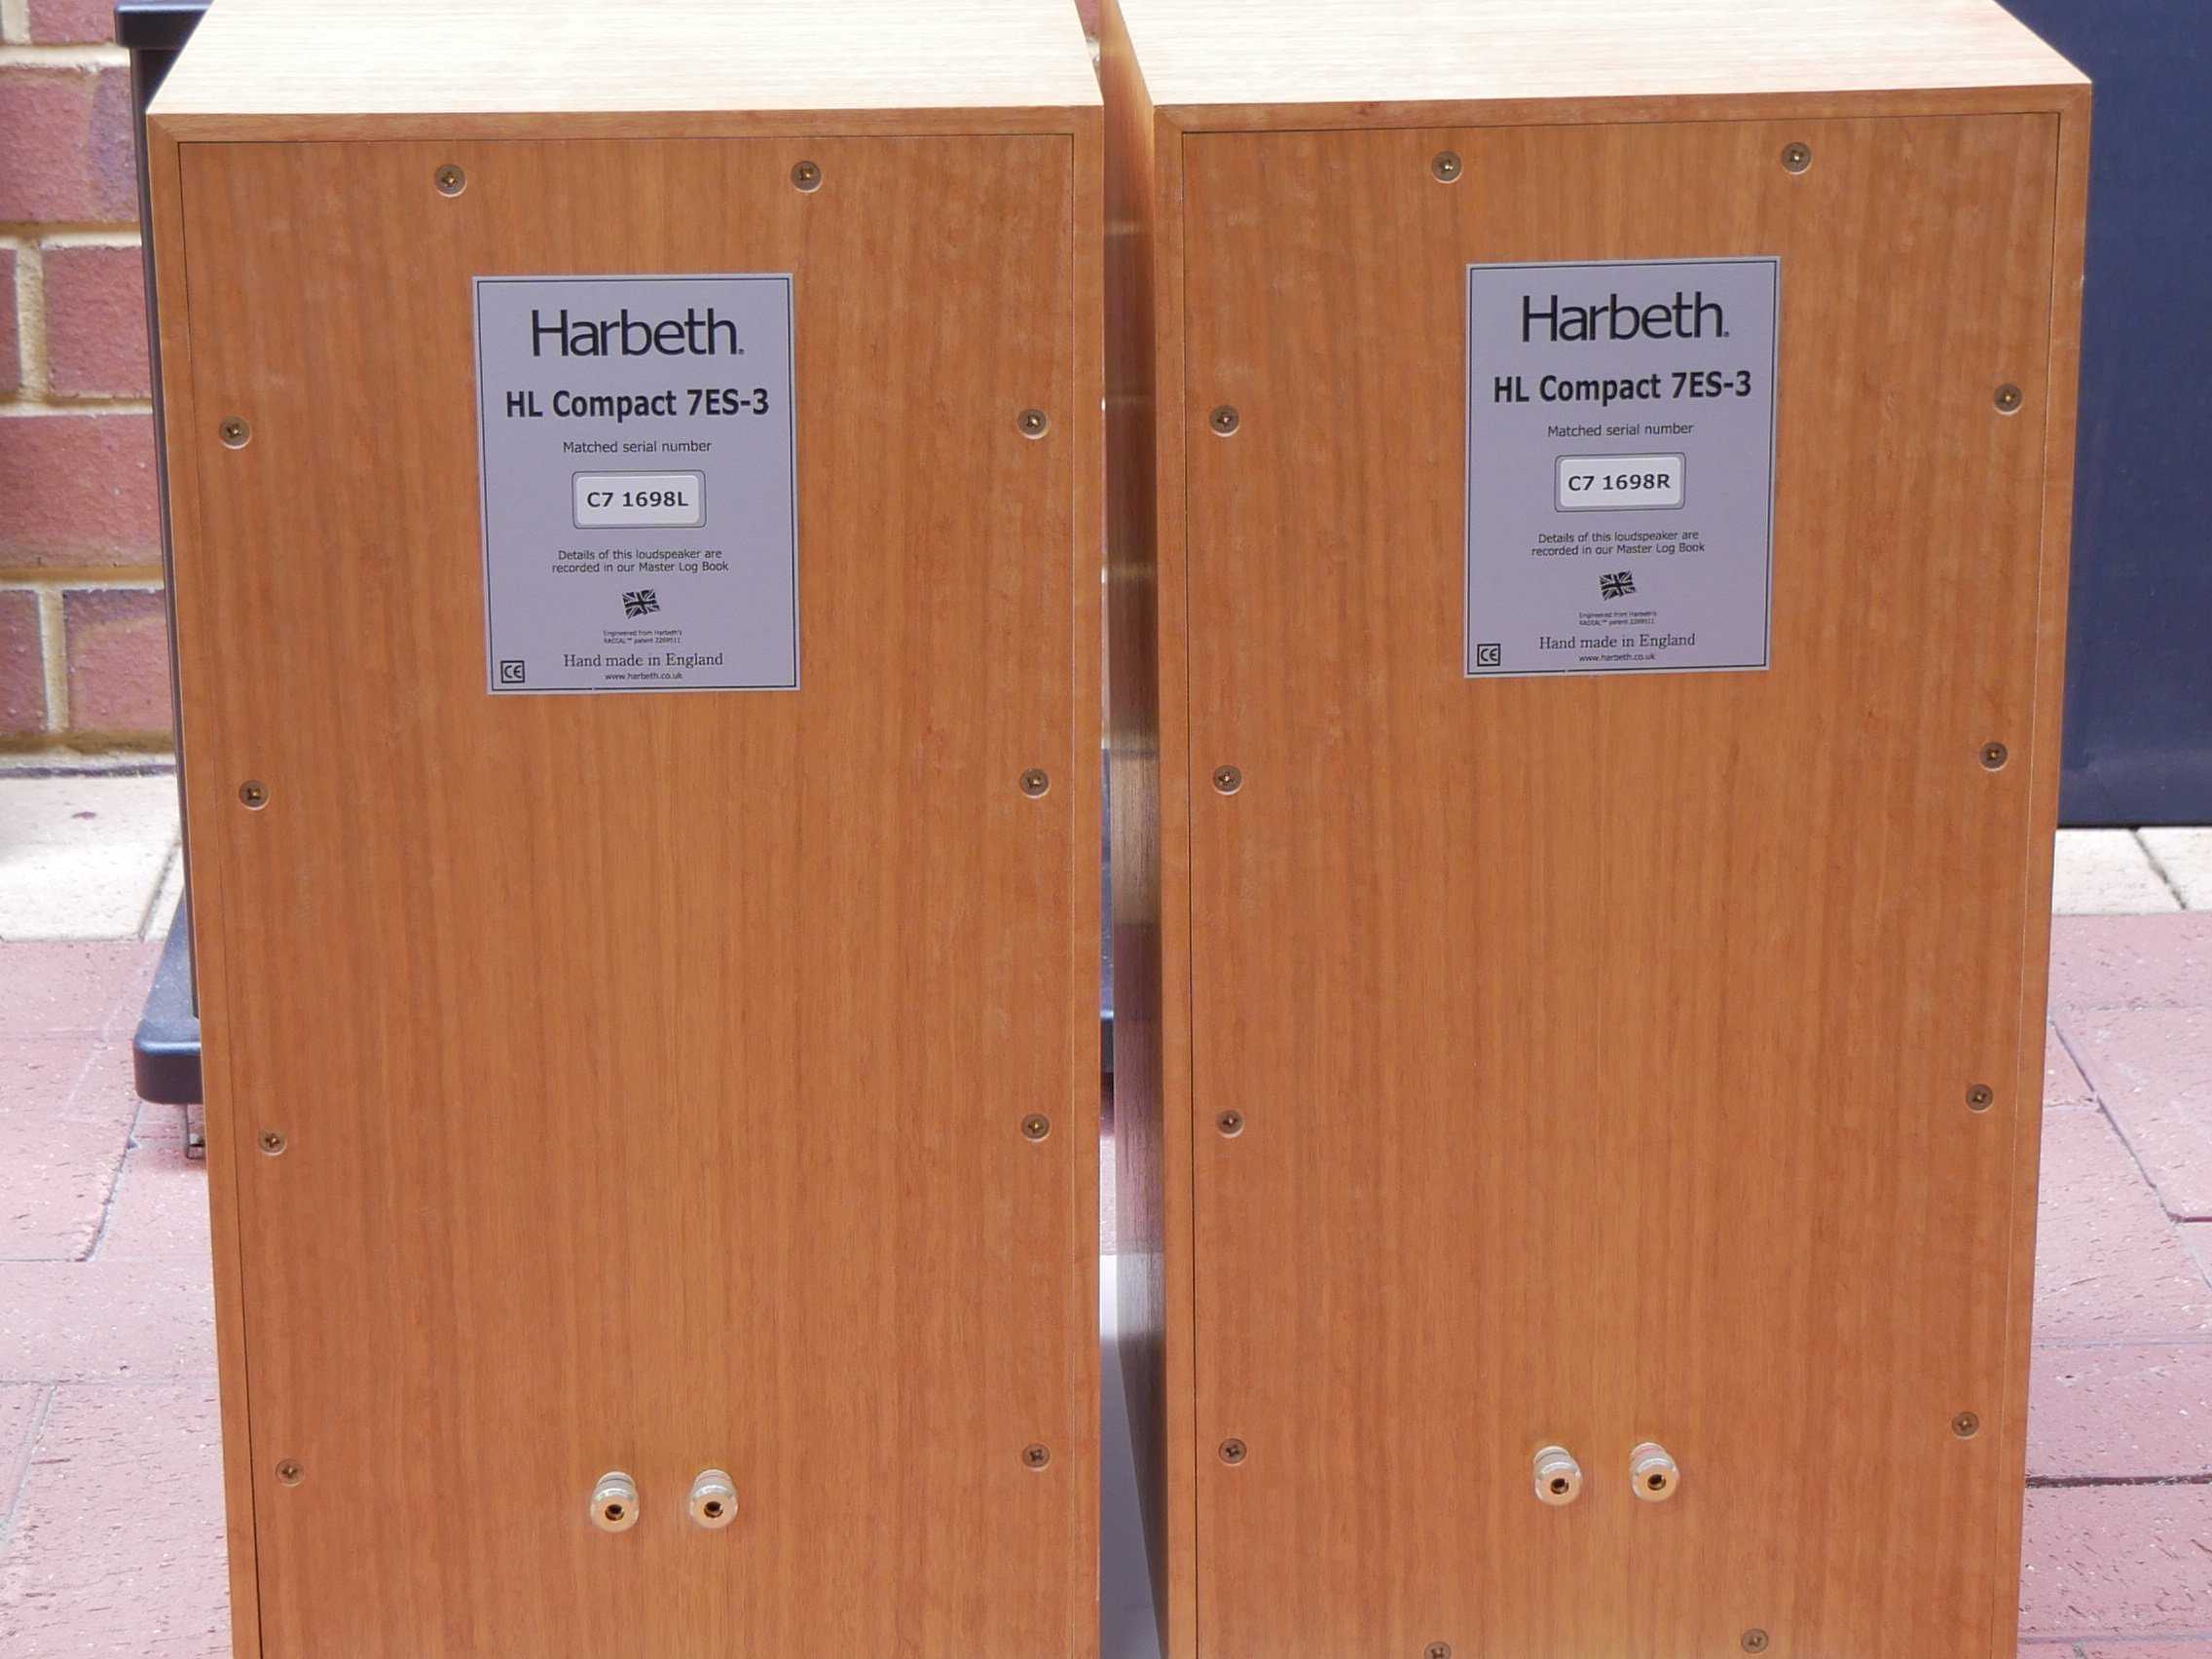 Harbeth compact 7es-3 loudspeaker: review - part-time audiophile